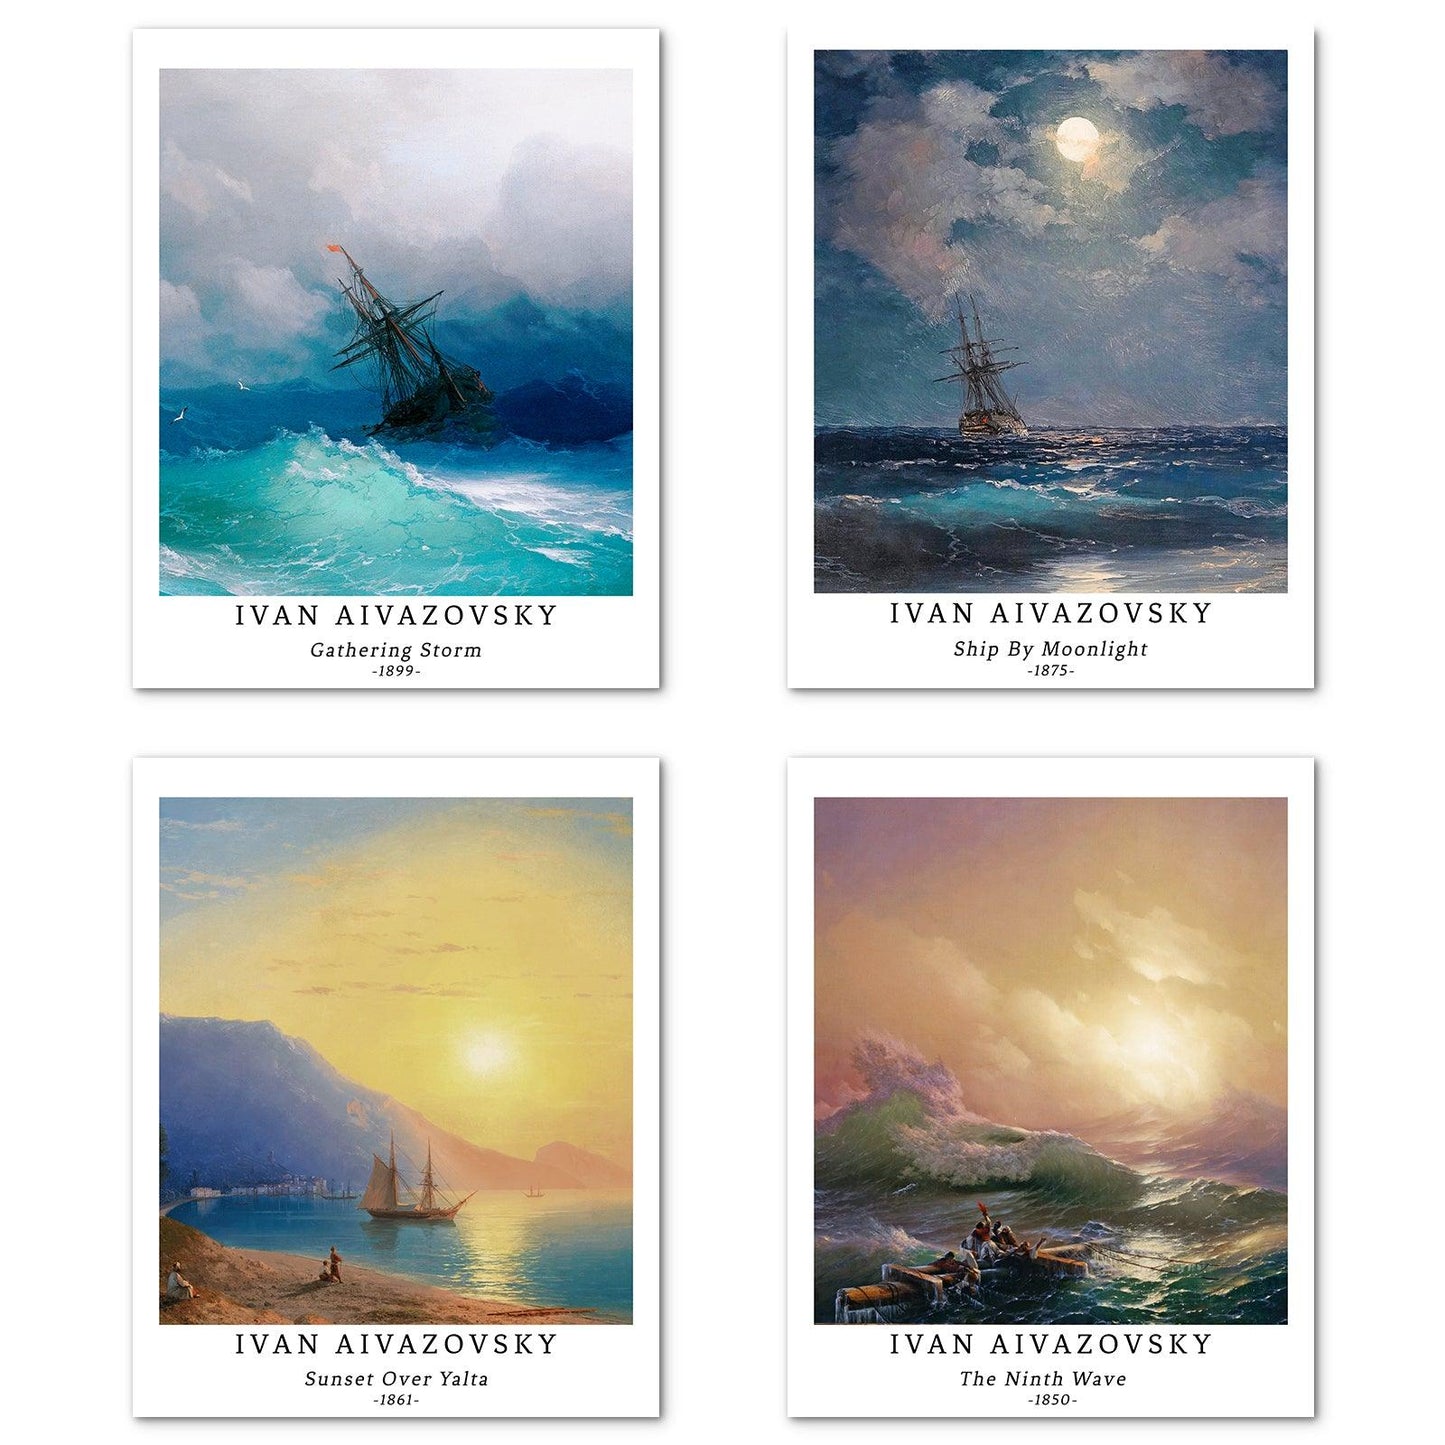 Classical Landscape Art Paper Giclee Prints Set of 4 (Ivan Aivazovsky Series) - Berkin Arts